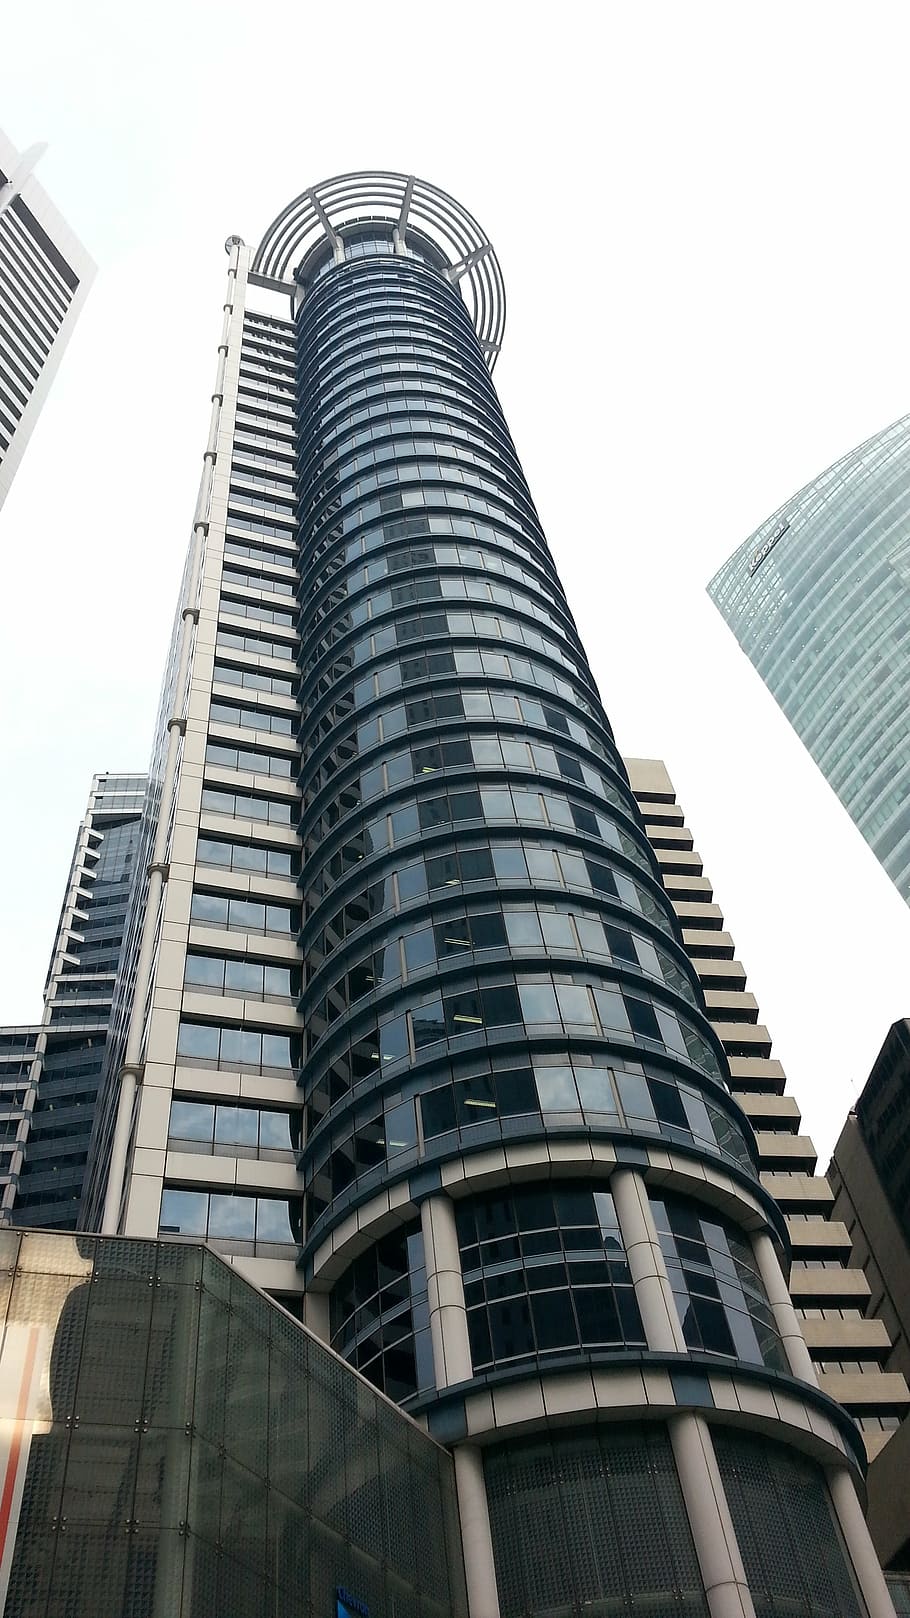 edificio, rascacielos, singapur, arquitectura, edificio de oficinas, exterior del edificio, escena urbana, estructura construida, moderna, torre